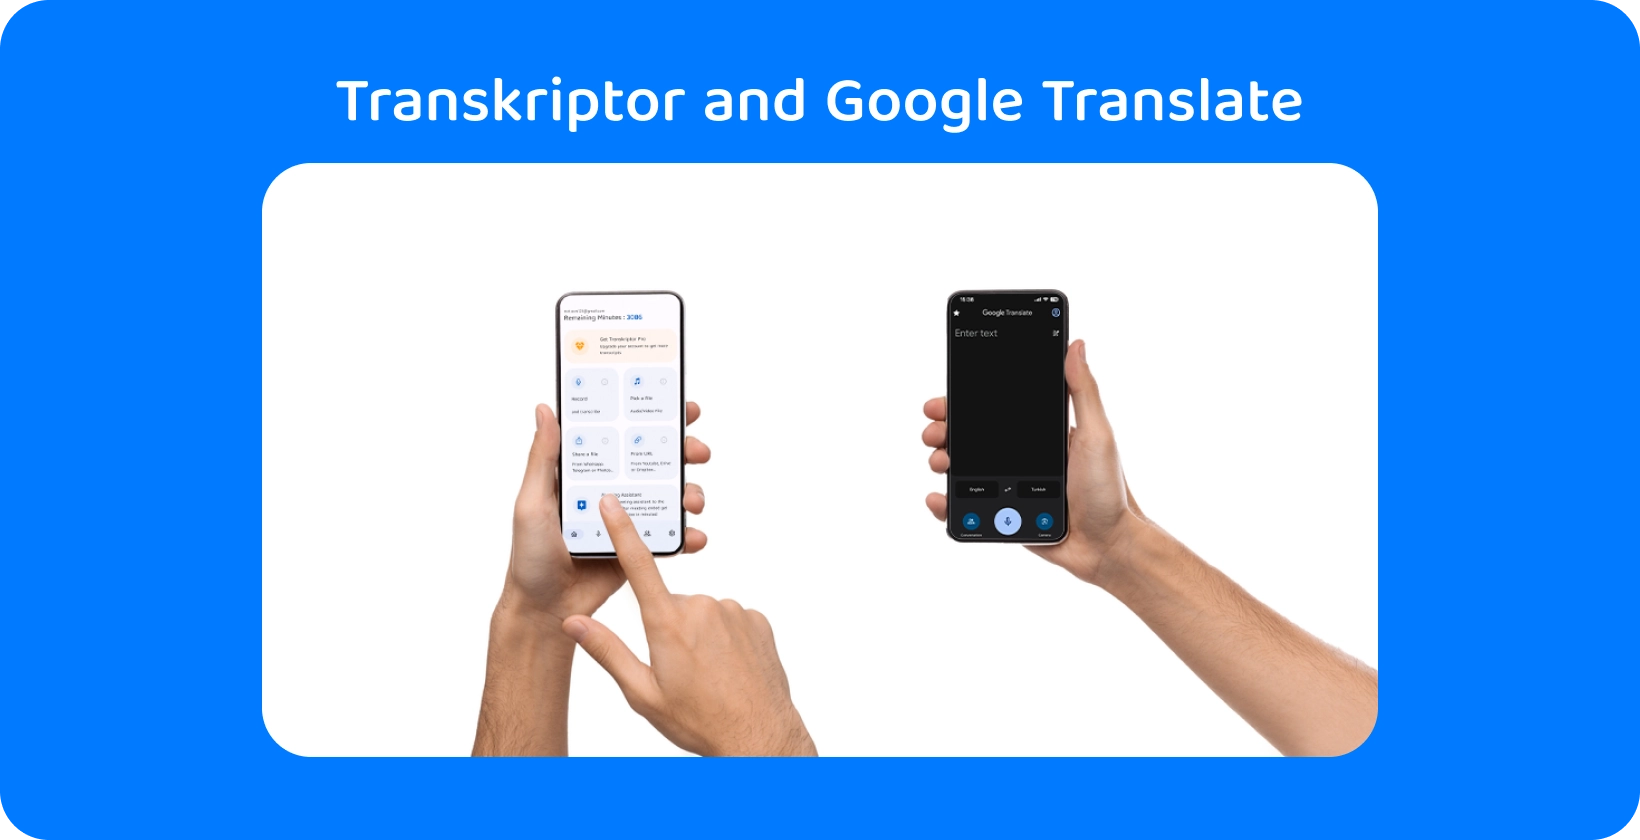 Two hands holding smartphones with Transkriptor and Google Translate, demonstrating audio transcription and translation.